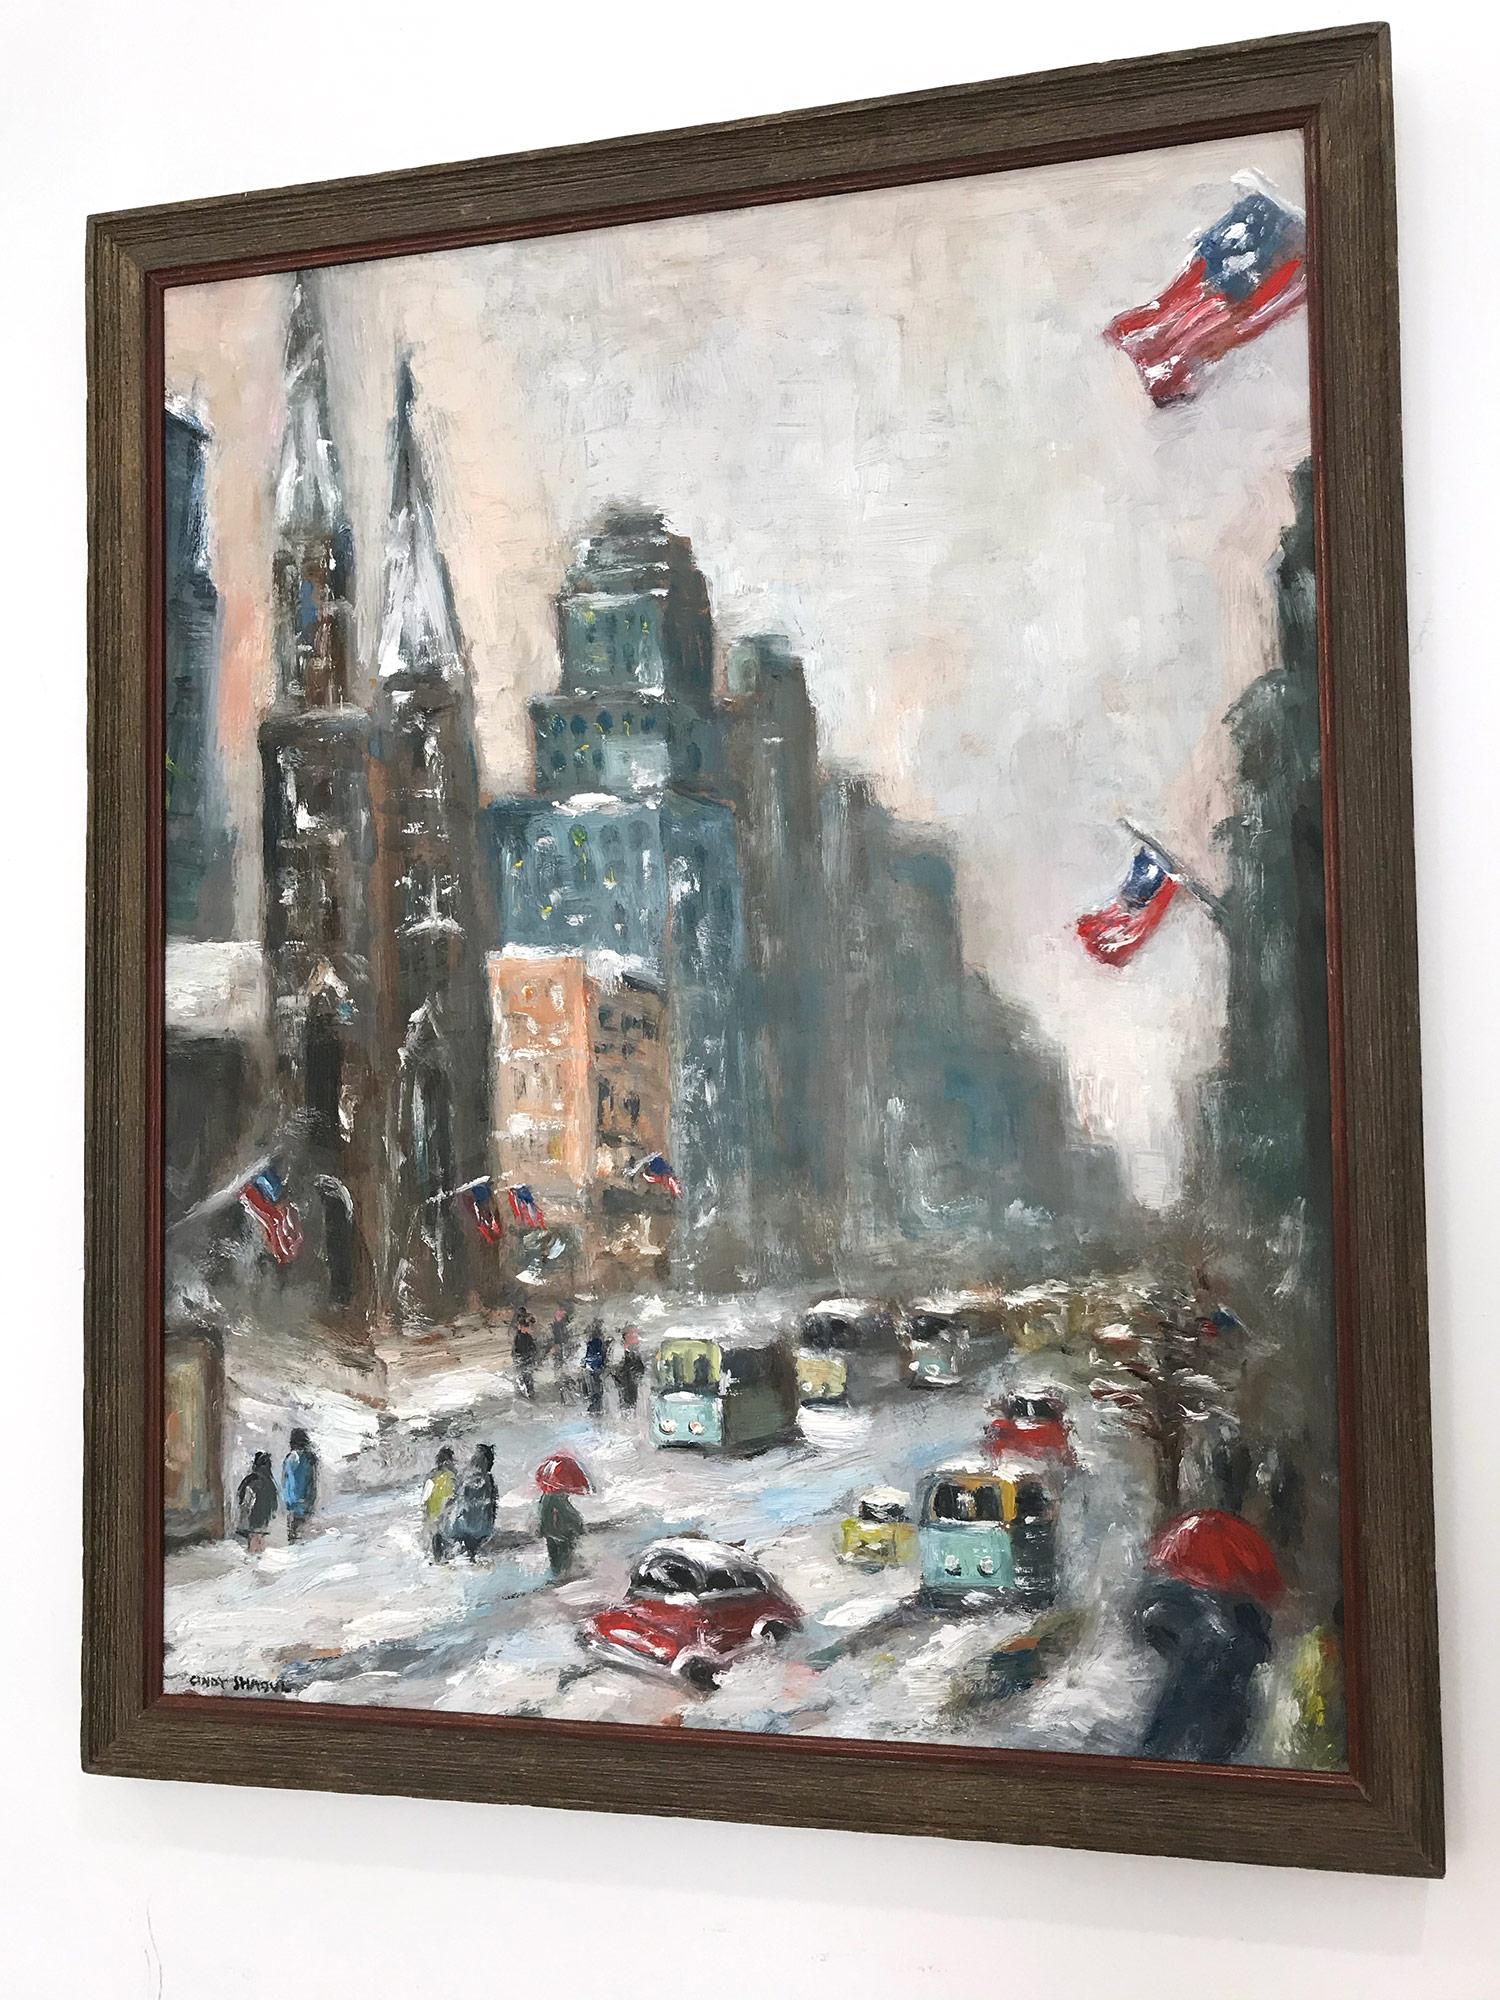 Snow in Downtown Wall Street, Impressionist Street Scene in style of Guy Wiggins 11